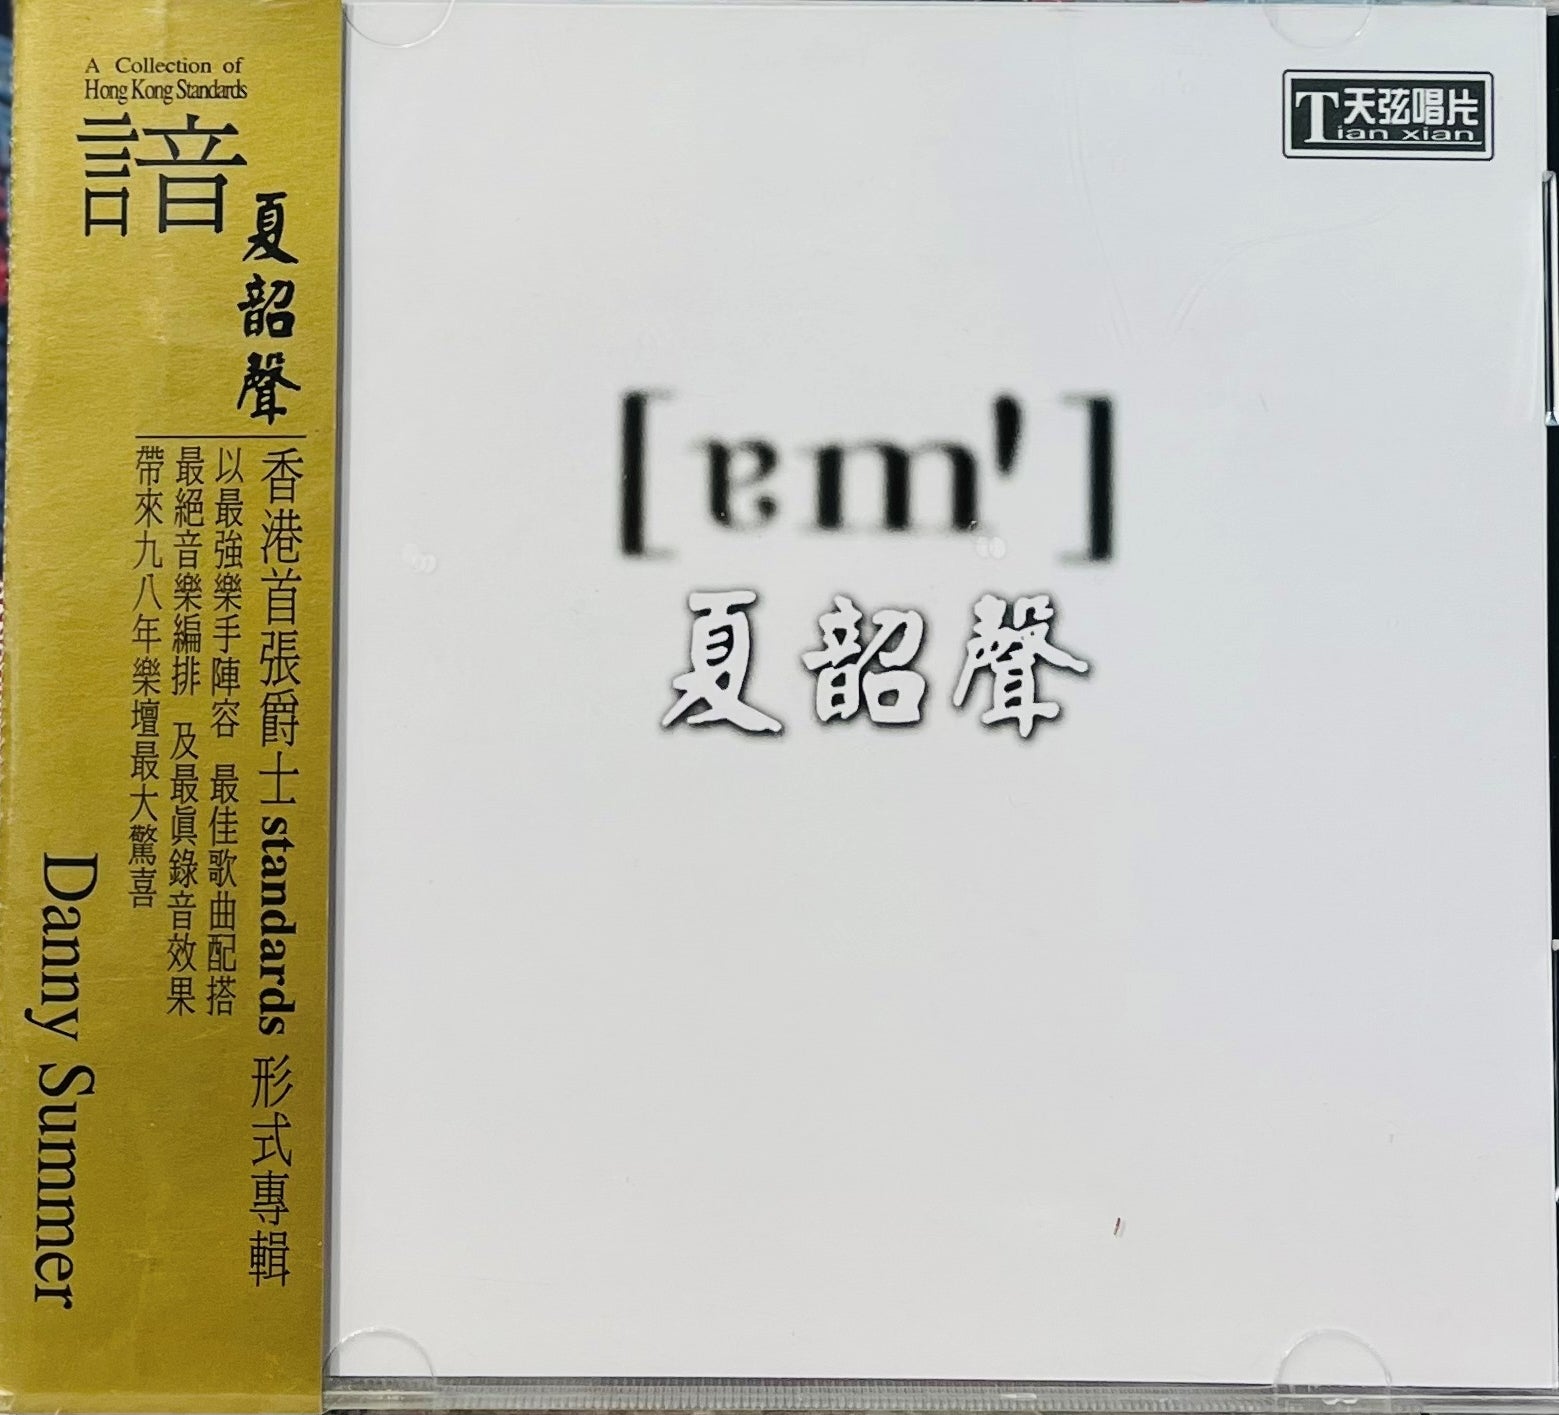 DANNY SUMMER - 夏韶聲 AM 諳 1 (CD)